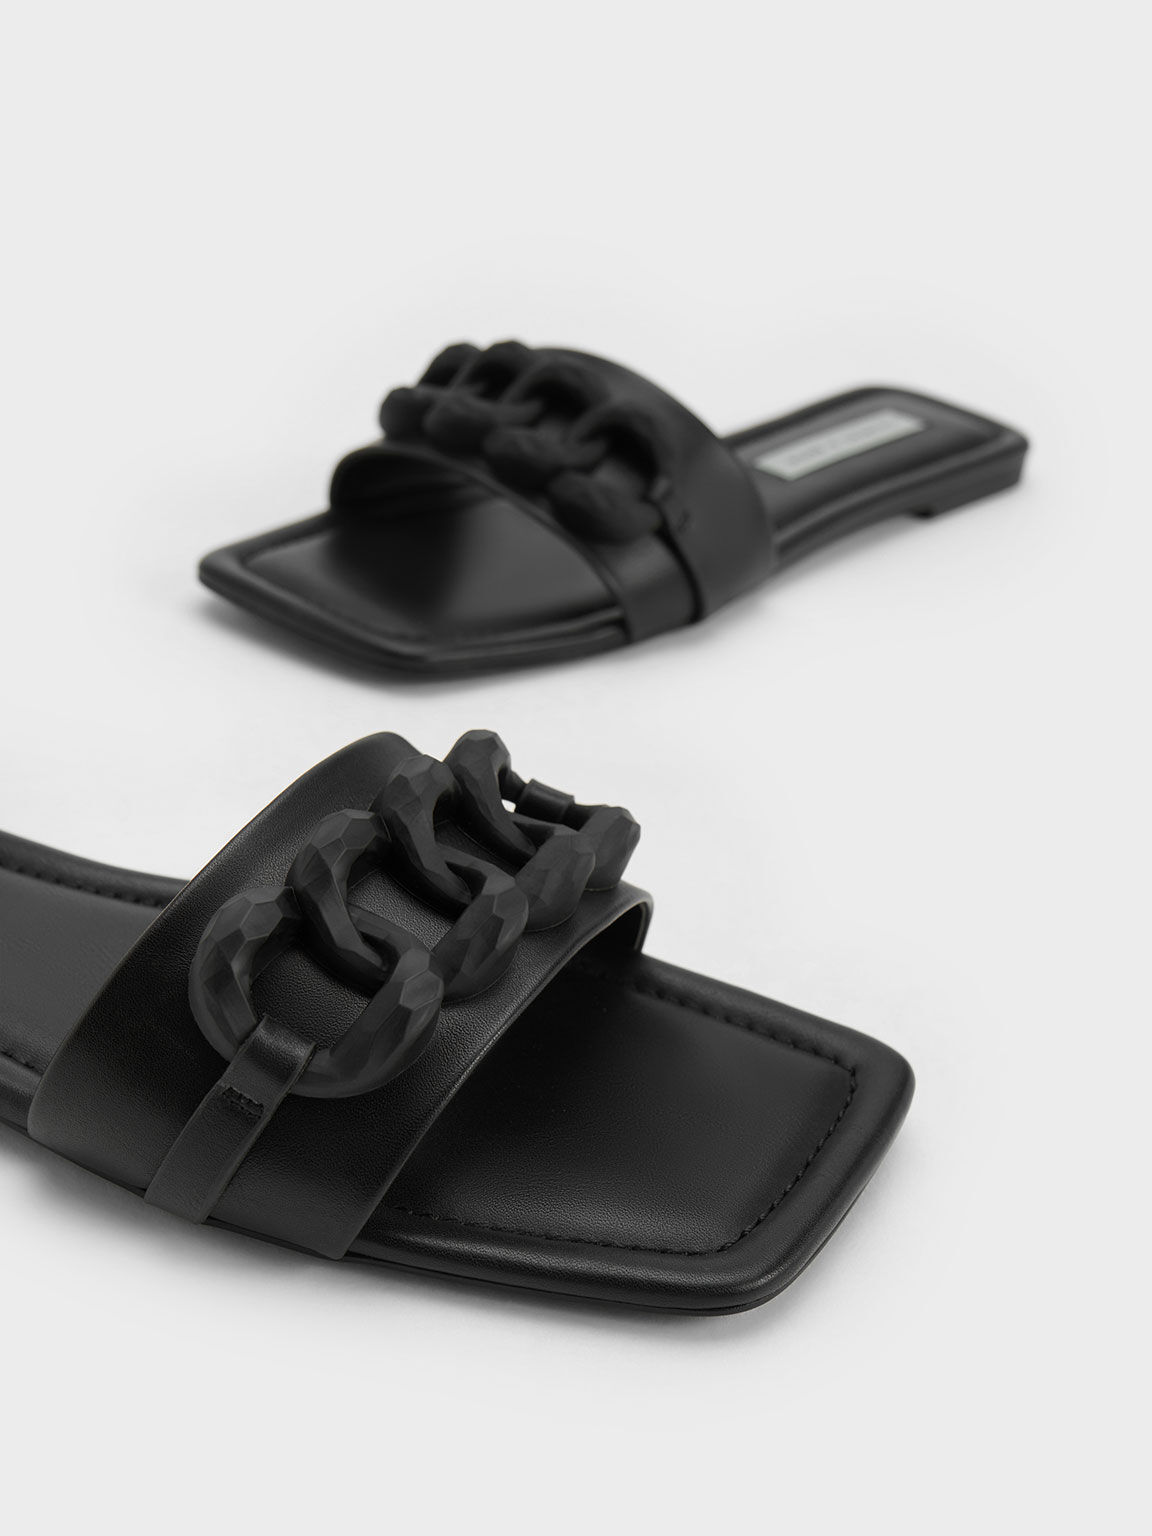 Black Sandal Slide Chunky Chain-Link, Black, hi-res